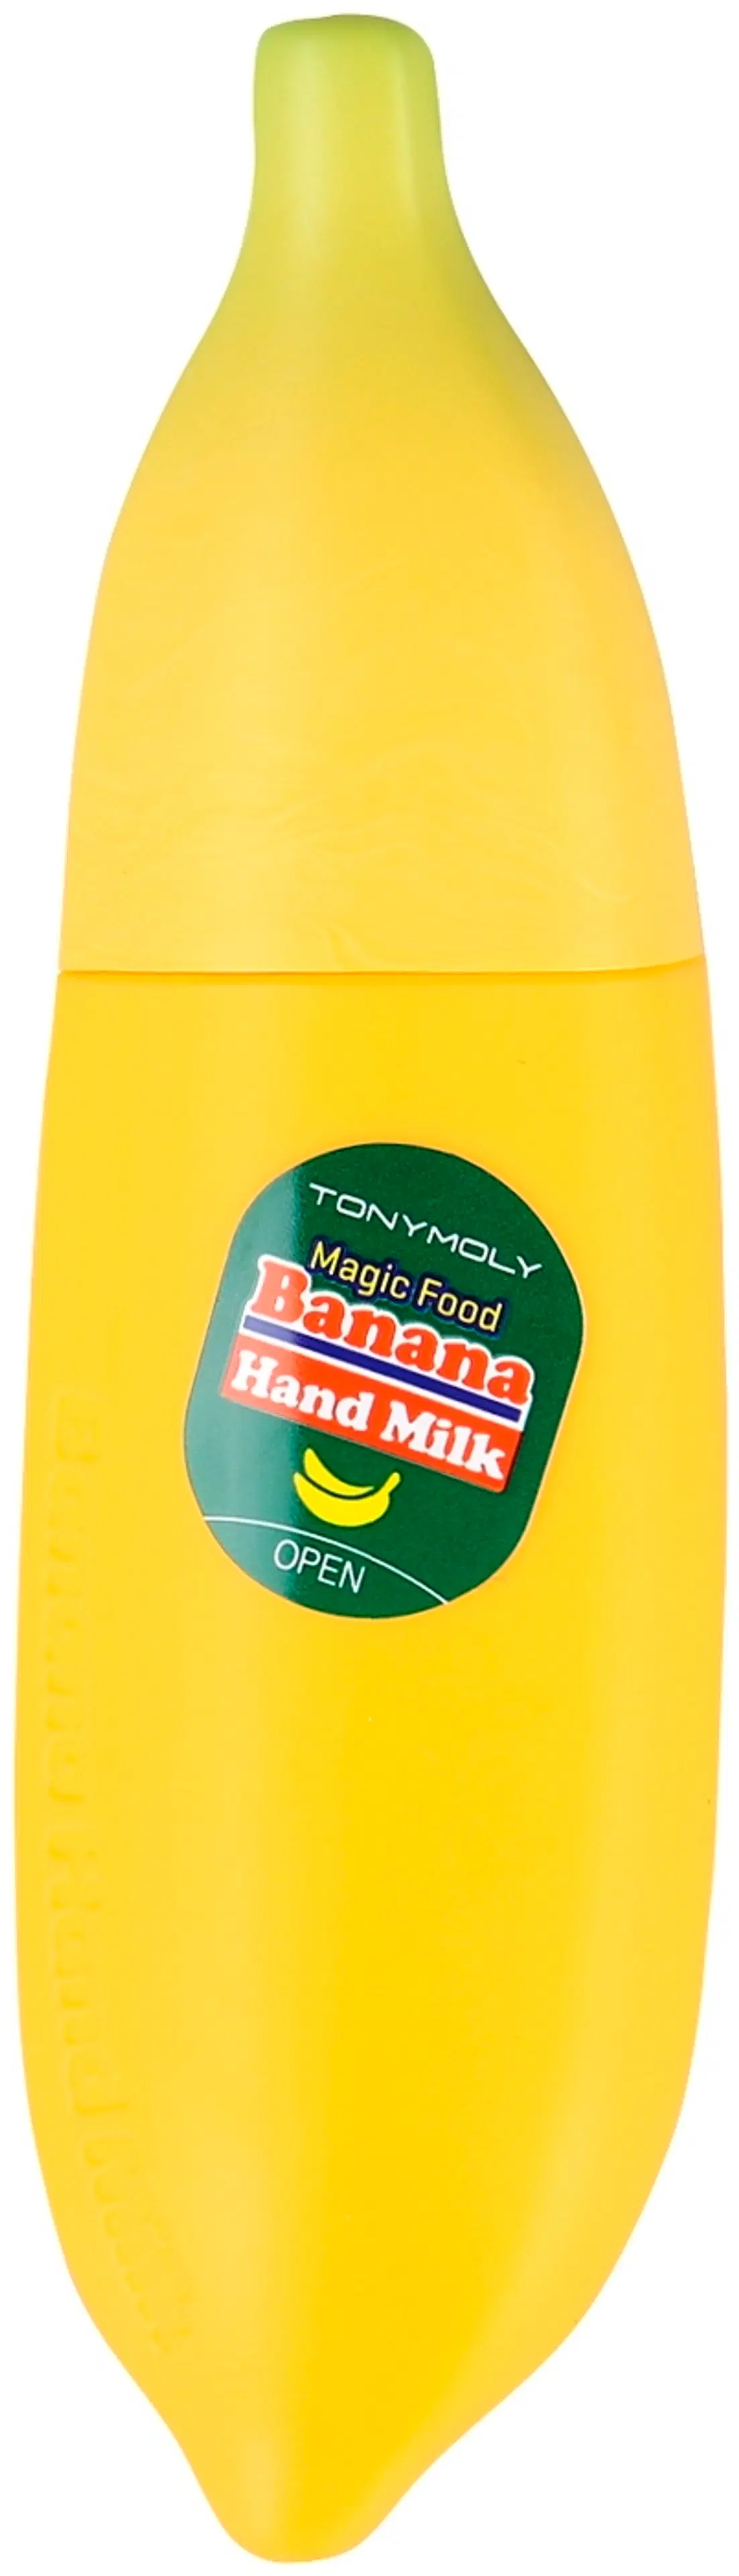 Tonymoly Magic Food Banana Hand Milk 45ml